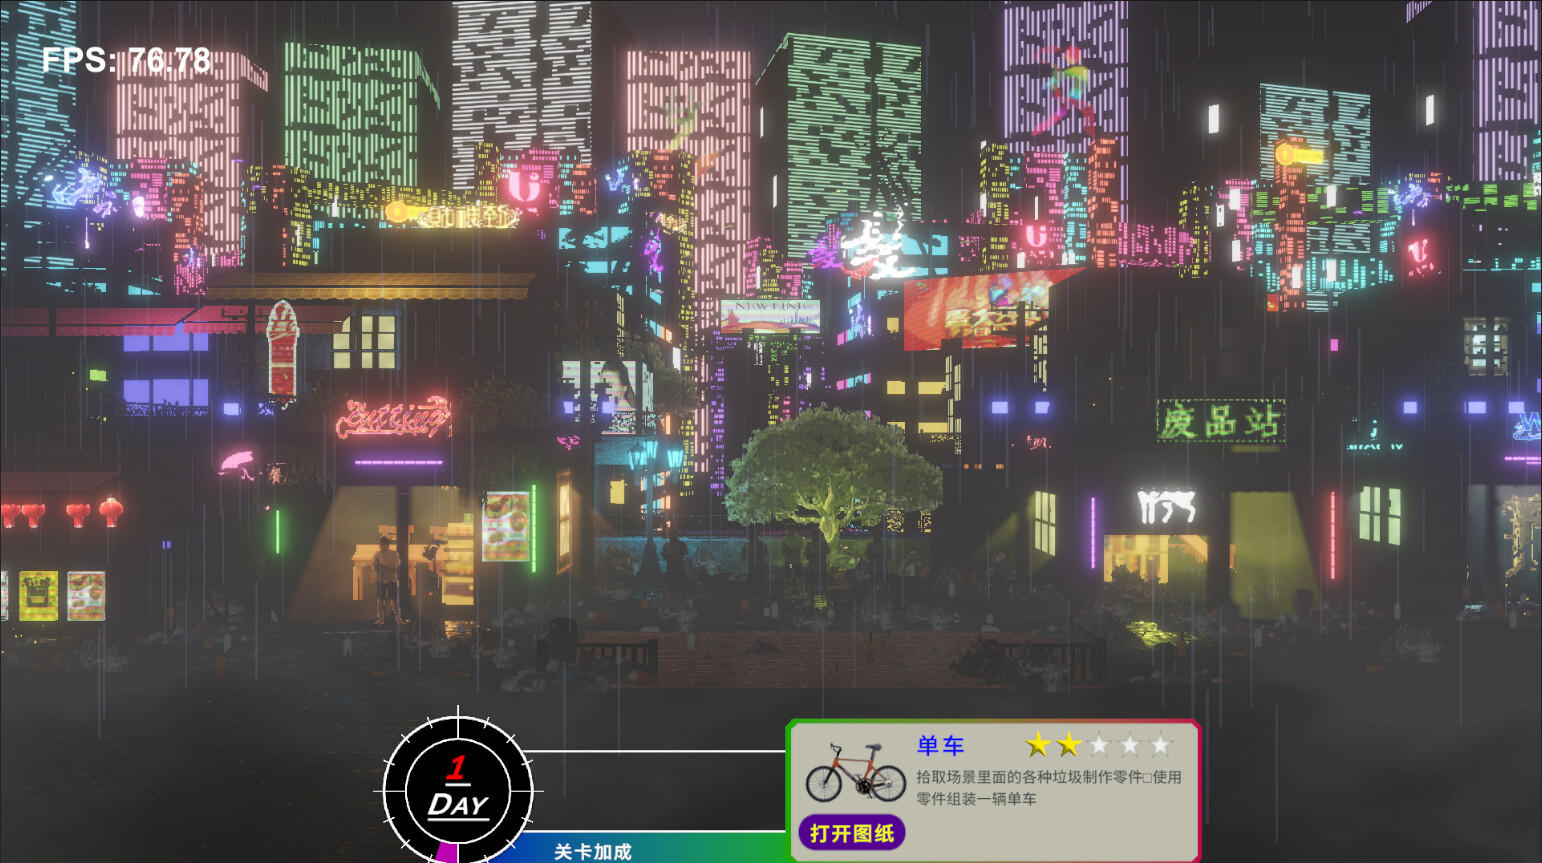 Neon City screenshot game